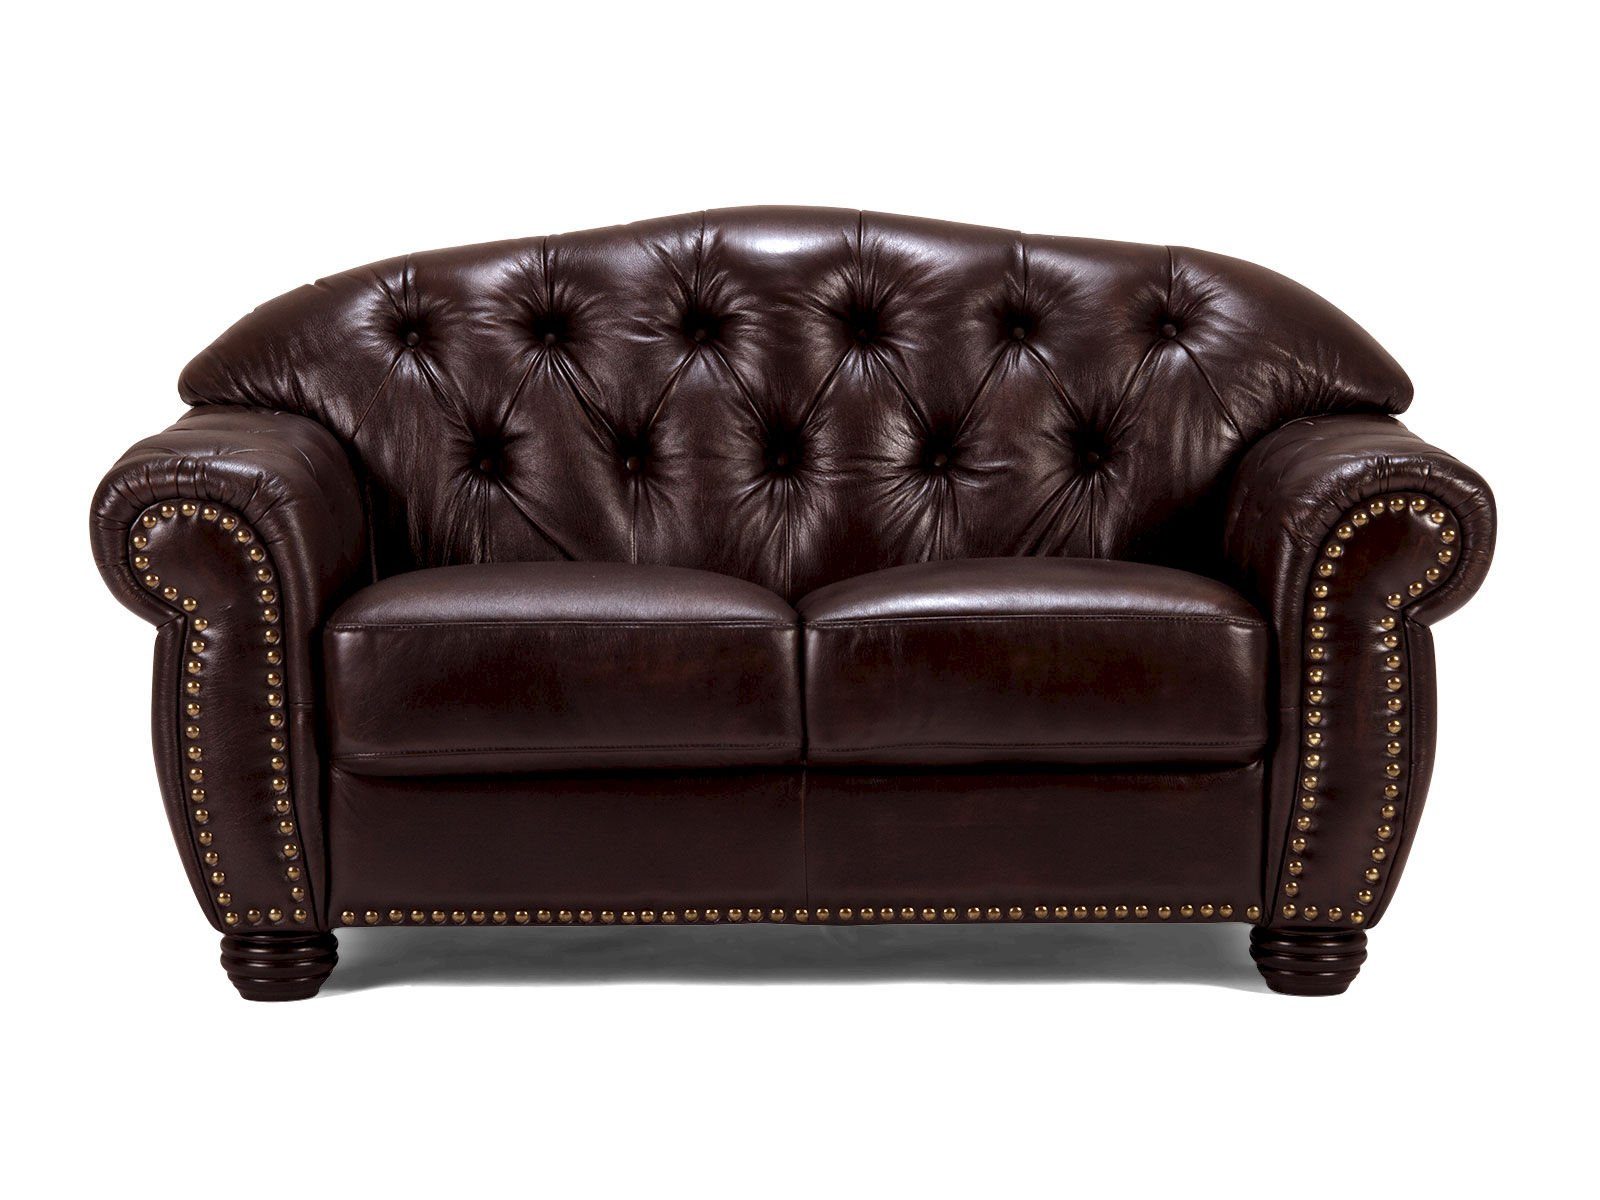 Echtleder 2-Sitzer braun Hereford Chesterfield massivum Sofa